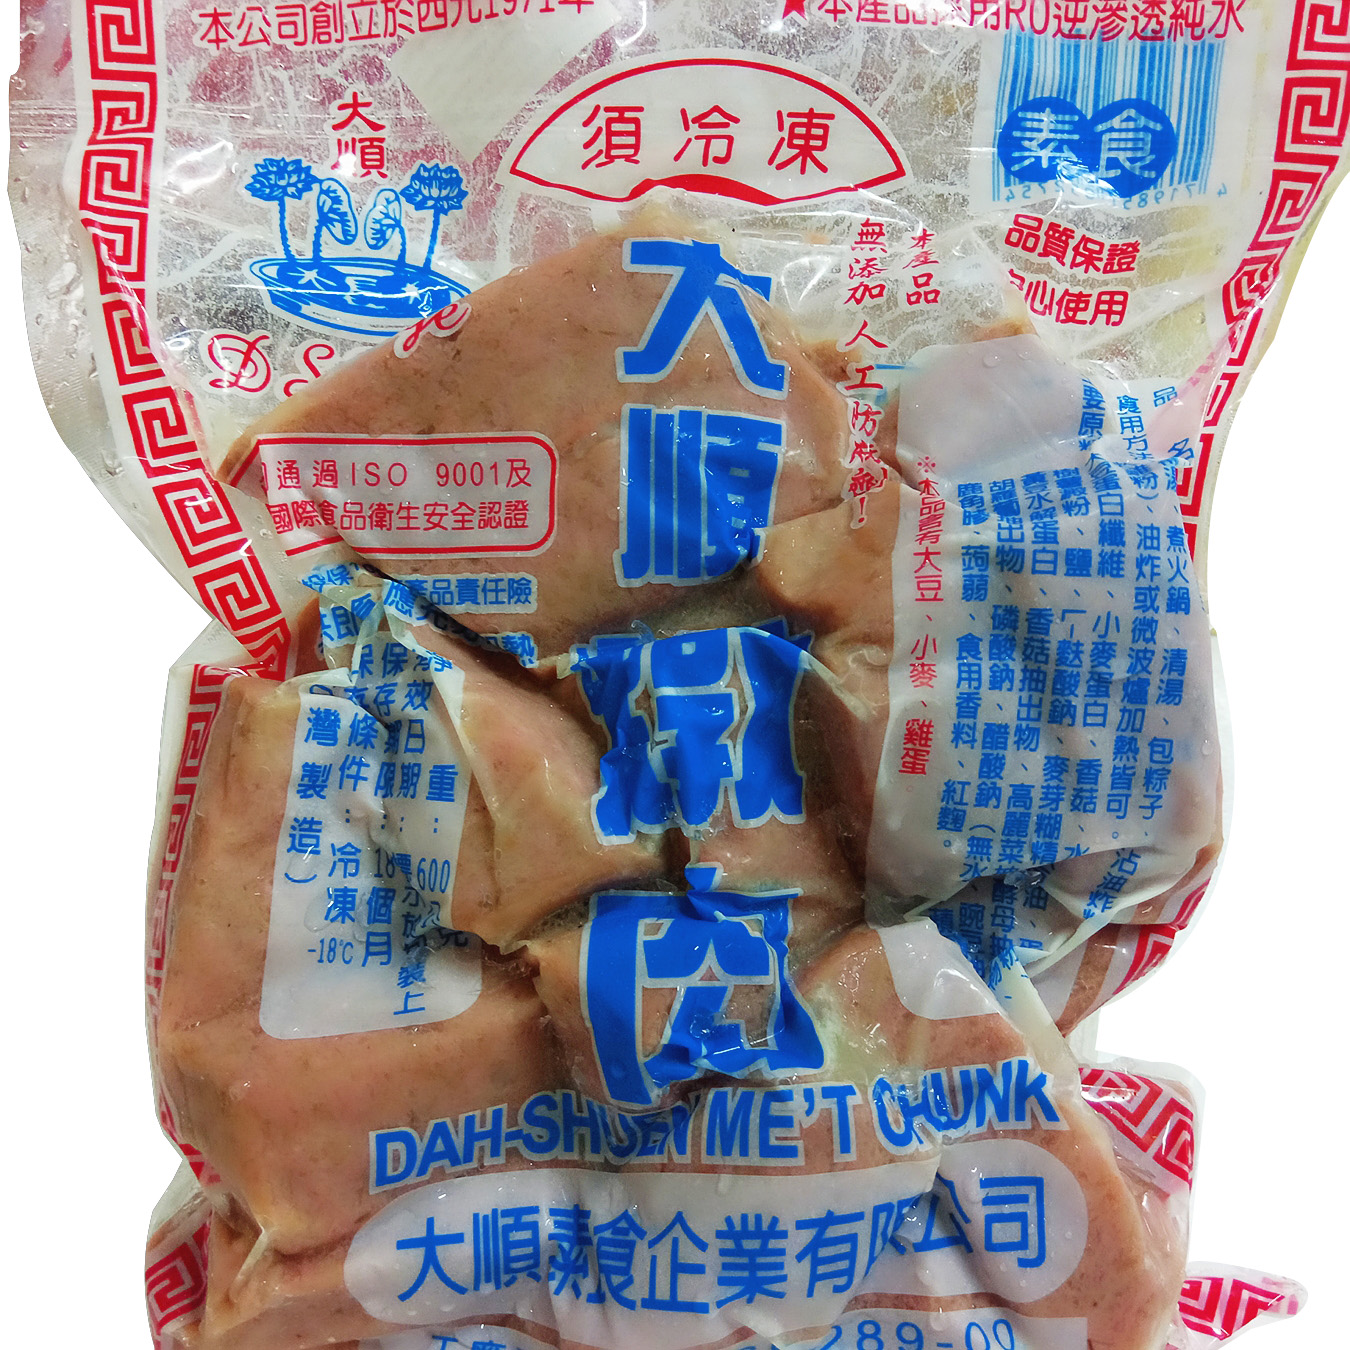 Image Dah Shuen Vegetarian Meat Chunk 大顺 - 炖肉 600grams